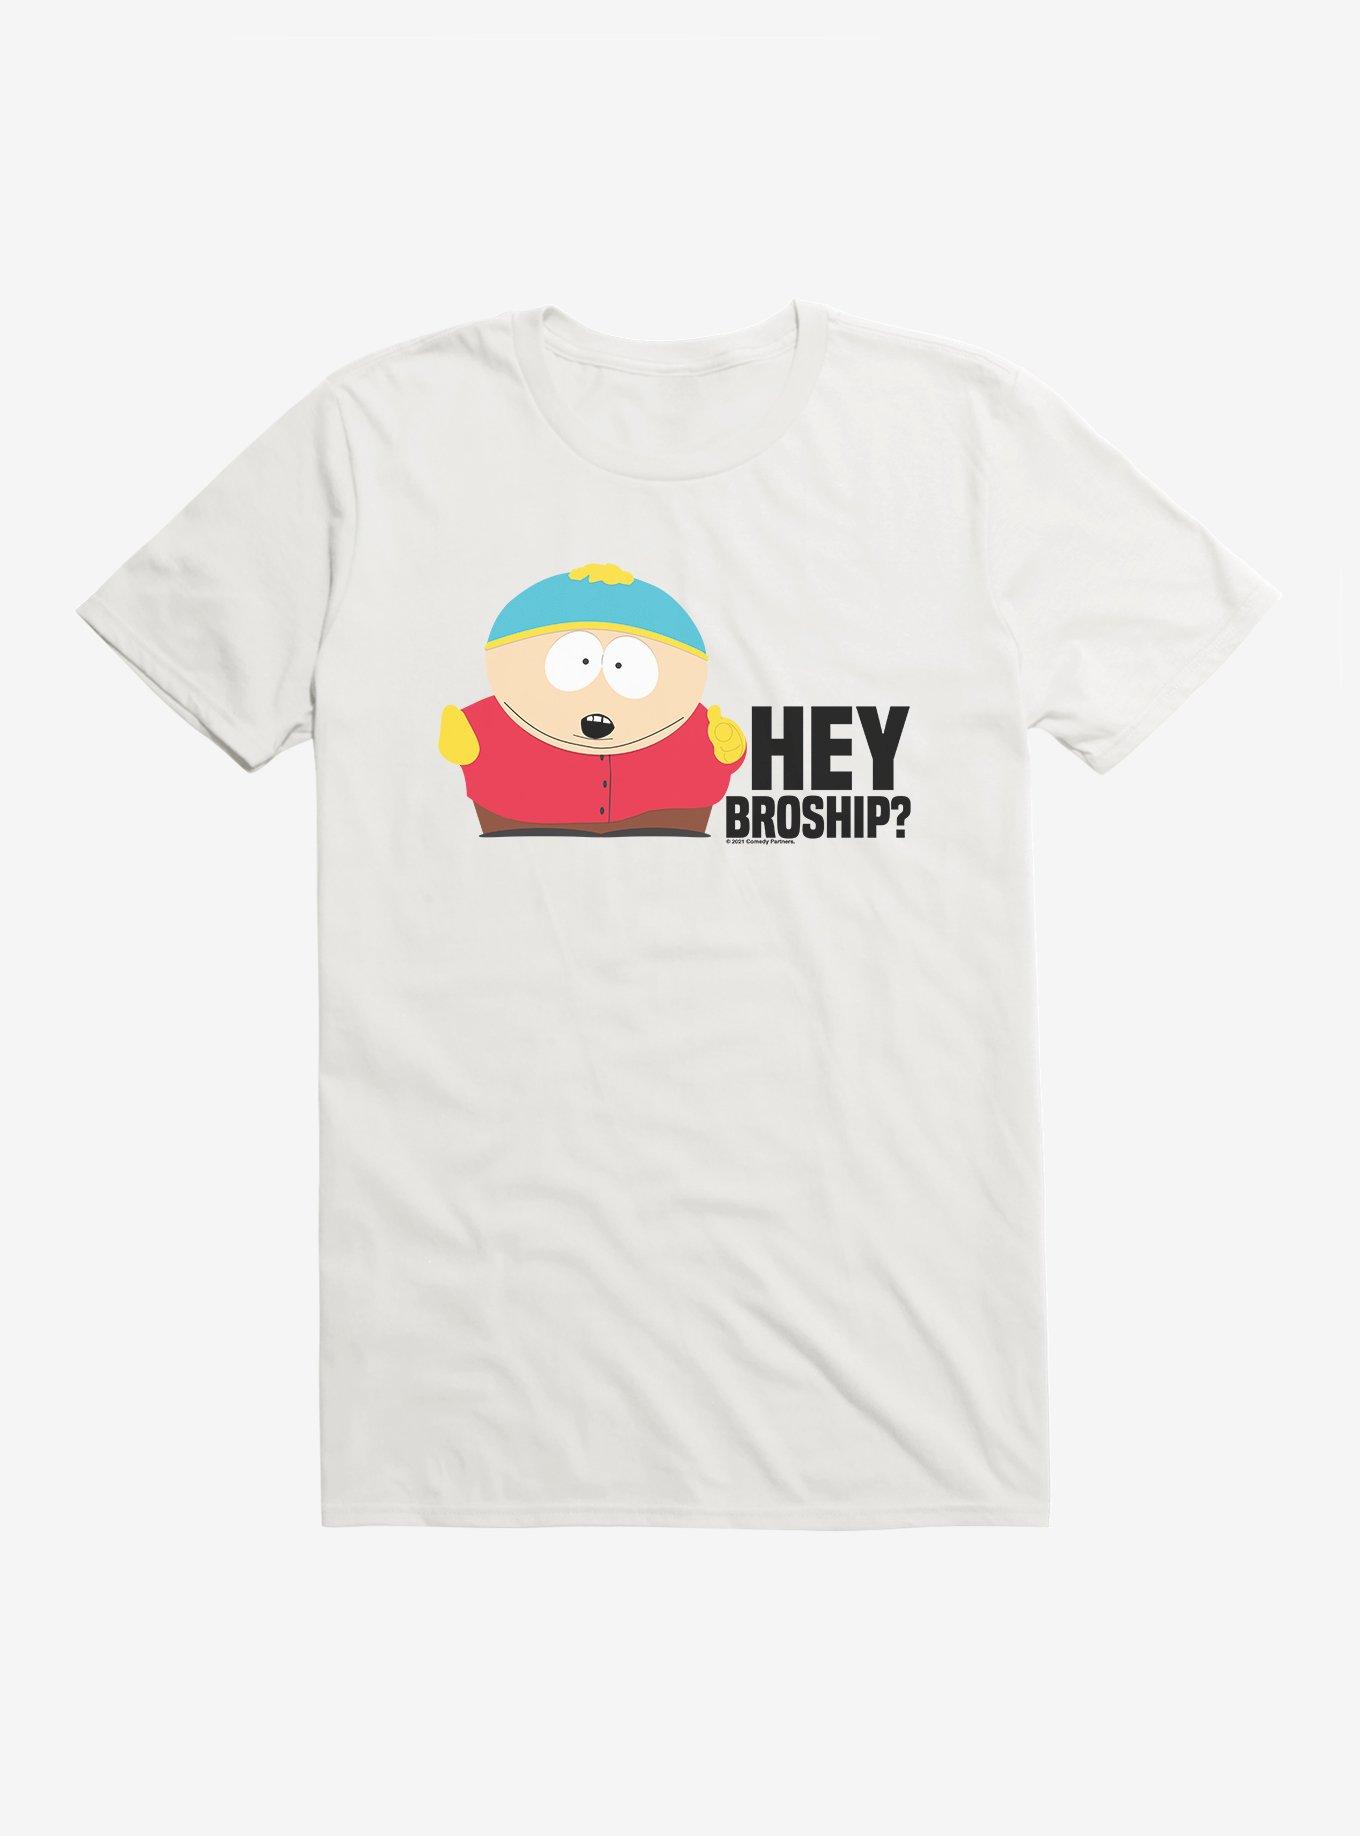 South Park Season Reference Broship T-Shirt, WHITE, hi-res